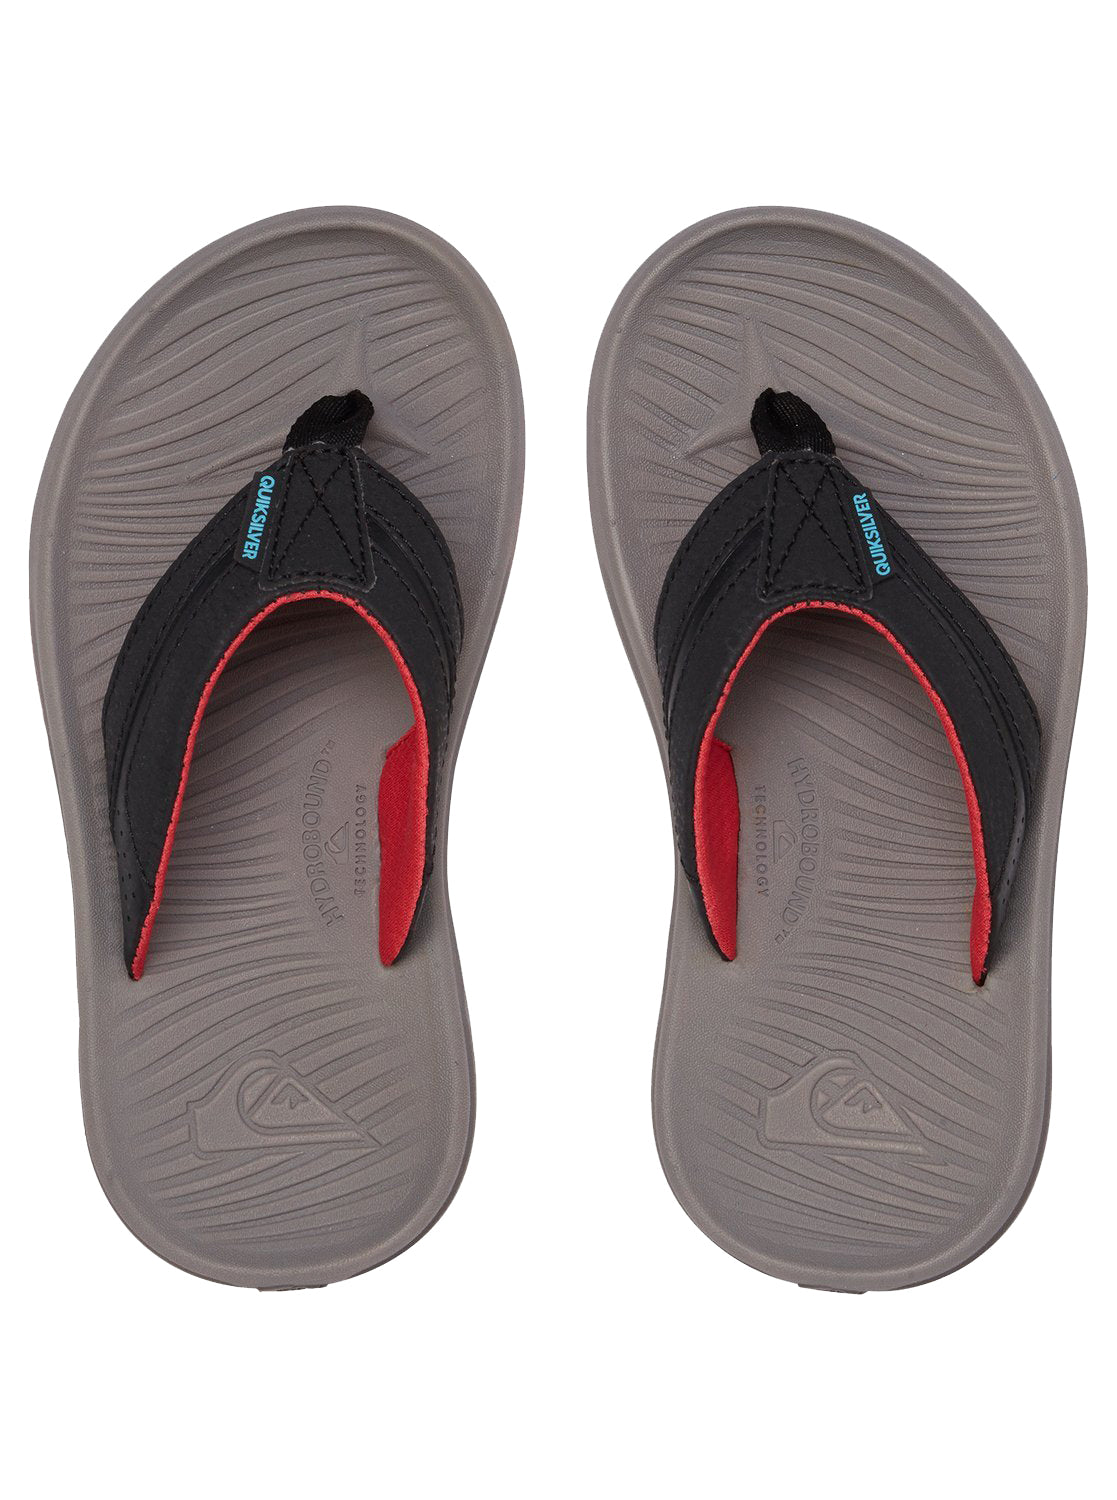 Quiksilver Oasis Youth Sandals XKSR-Black-Grey-Red 12 C